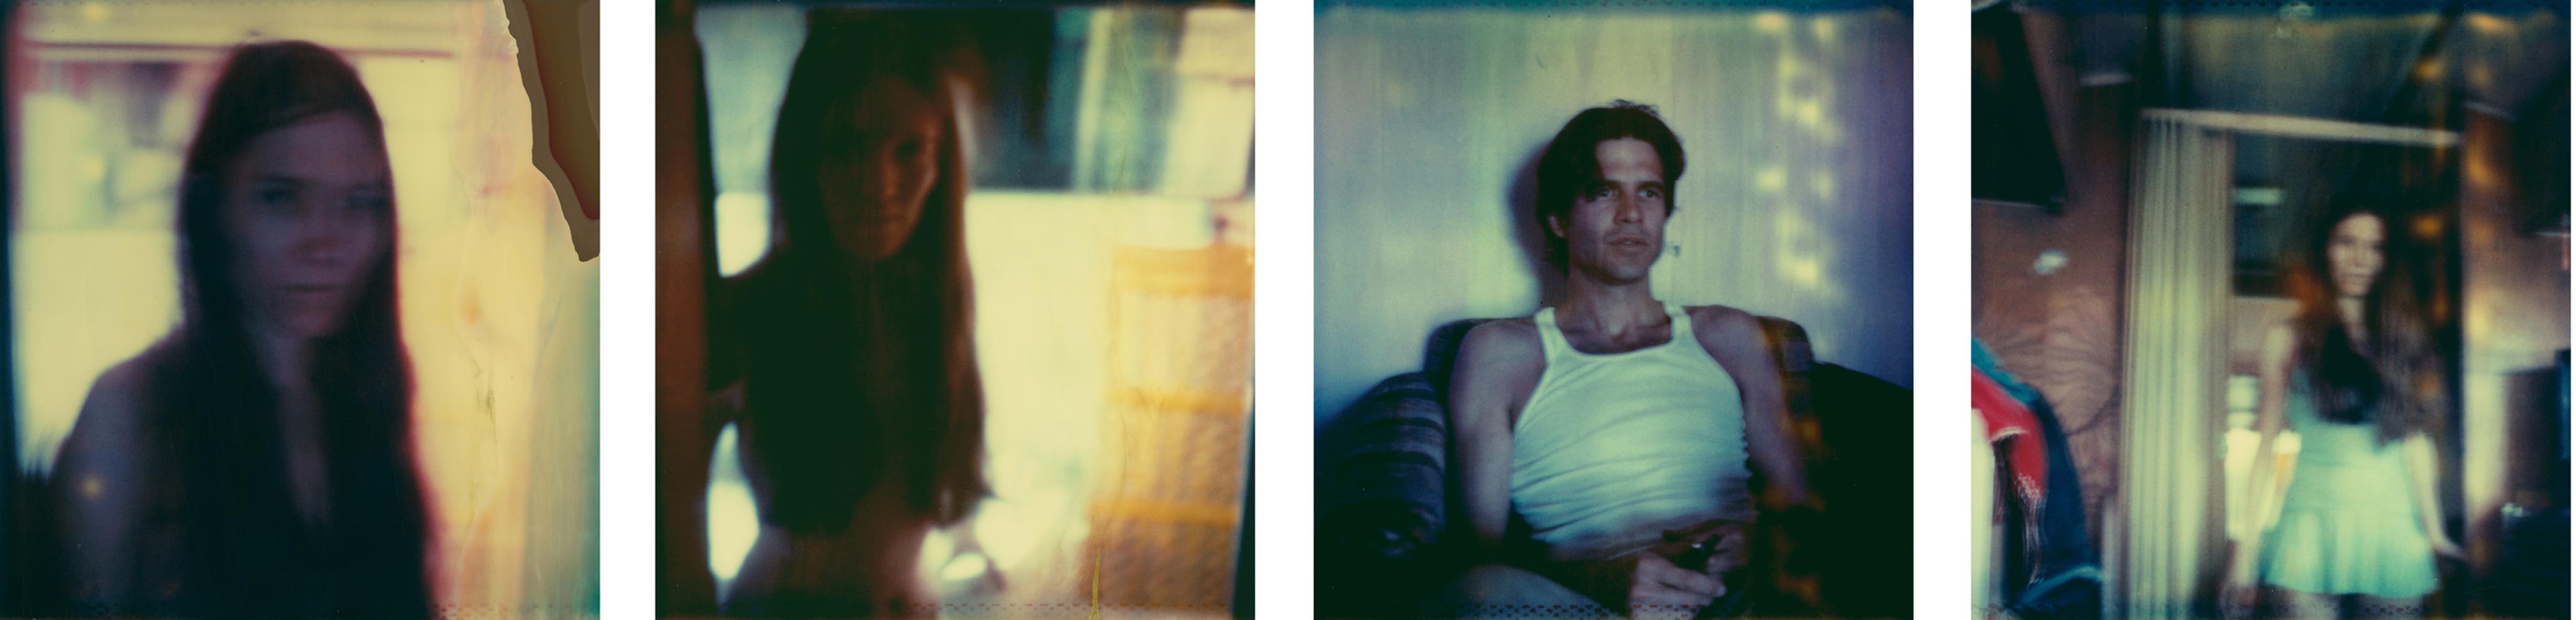 Inside the Trailer - 21st Century, Polaroid, Figurative, Photograph, Nude